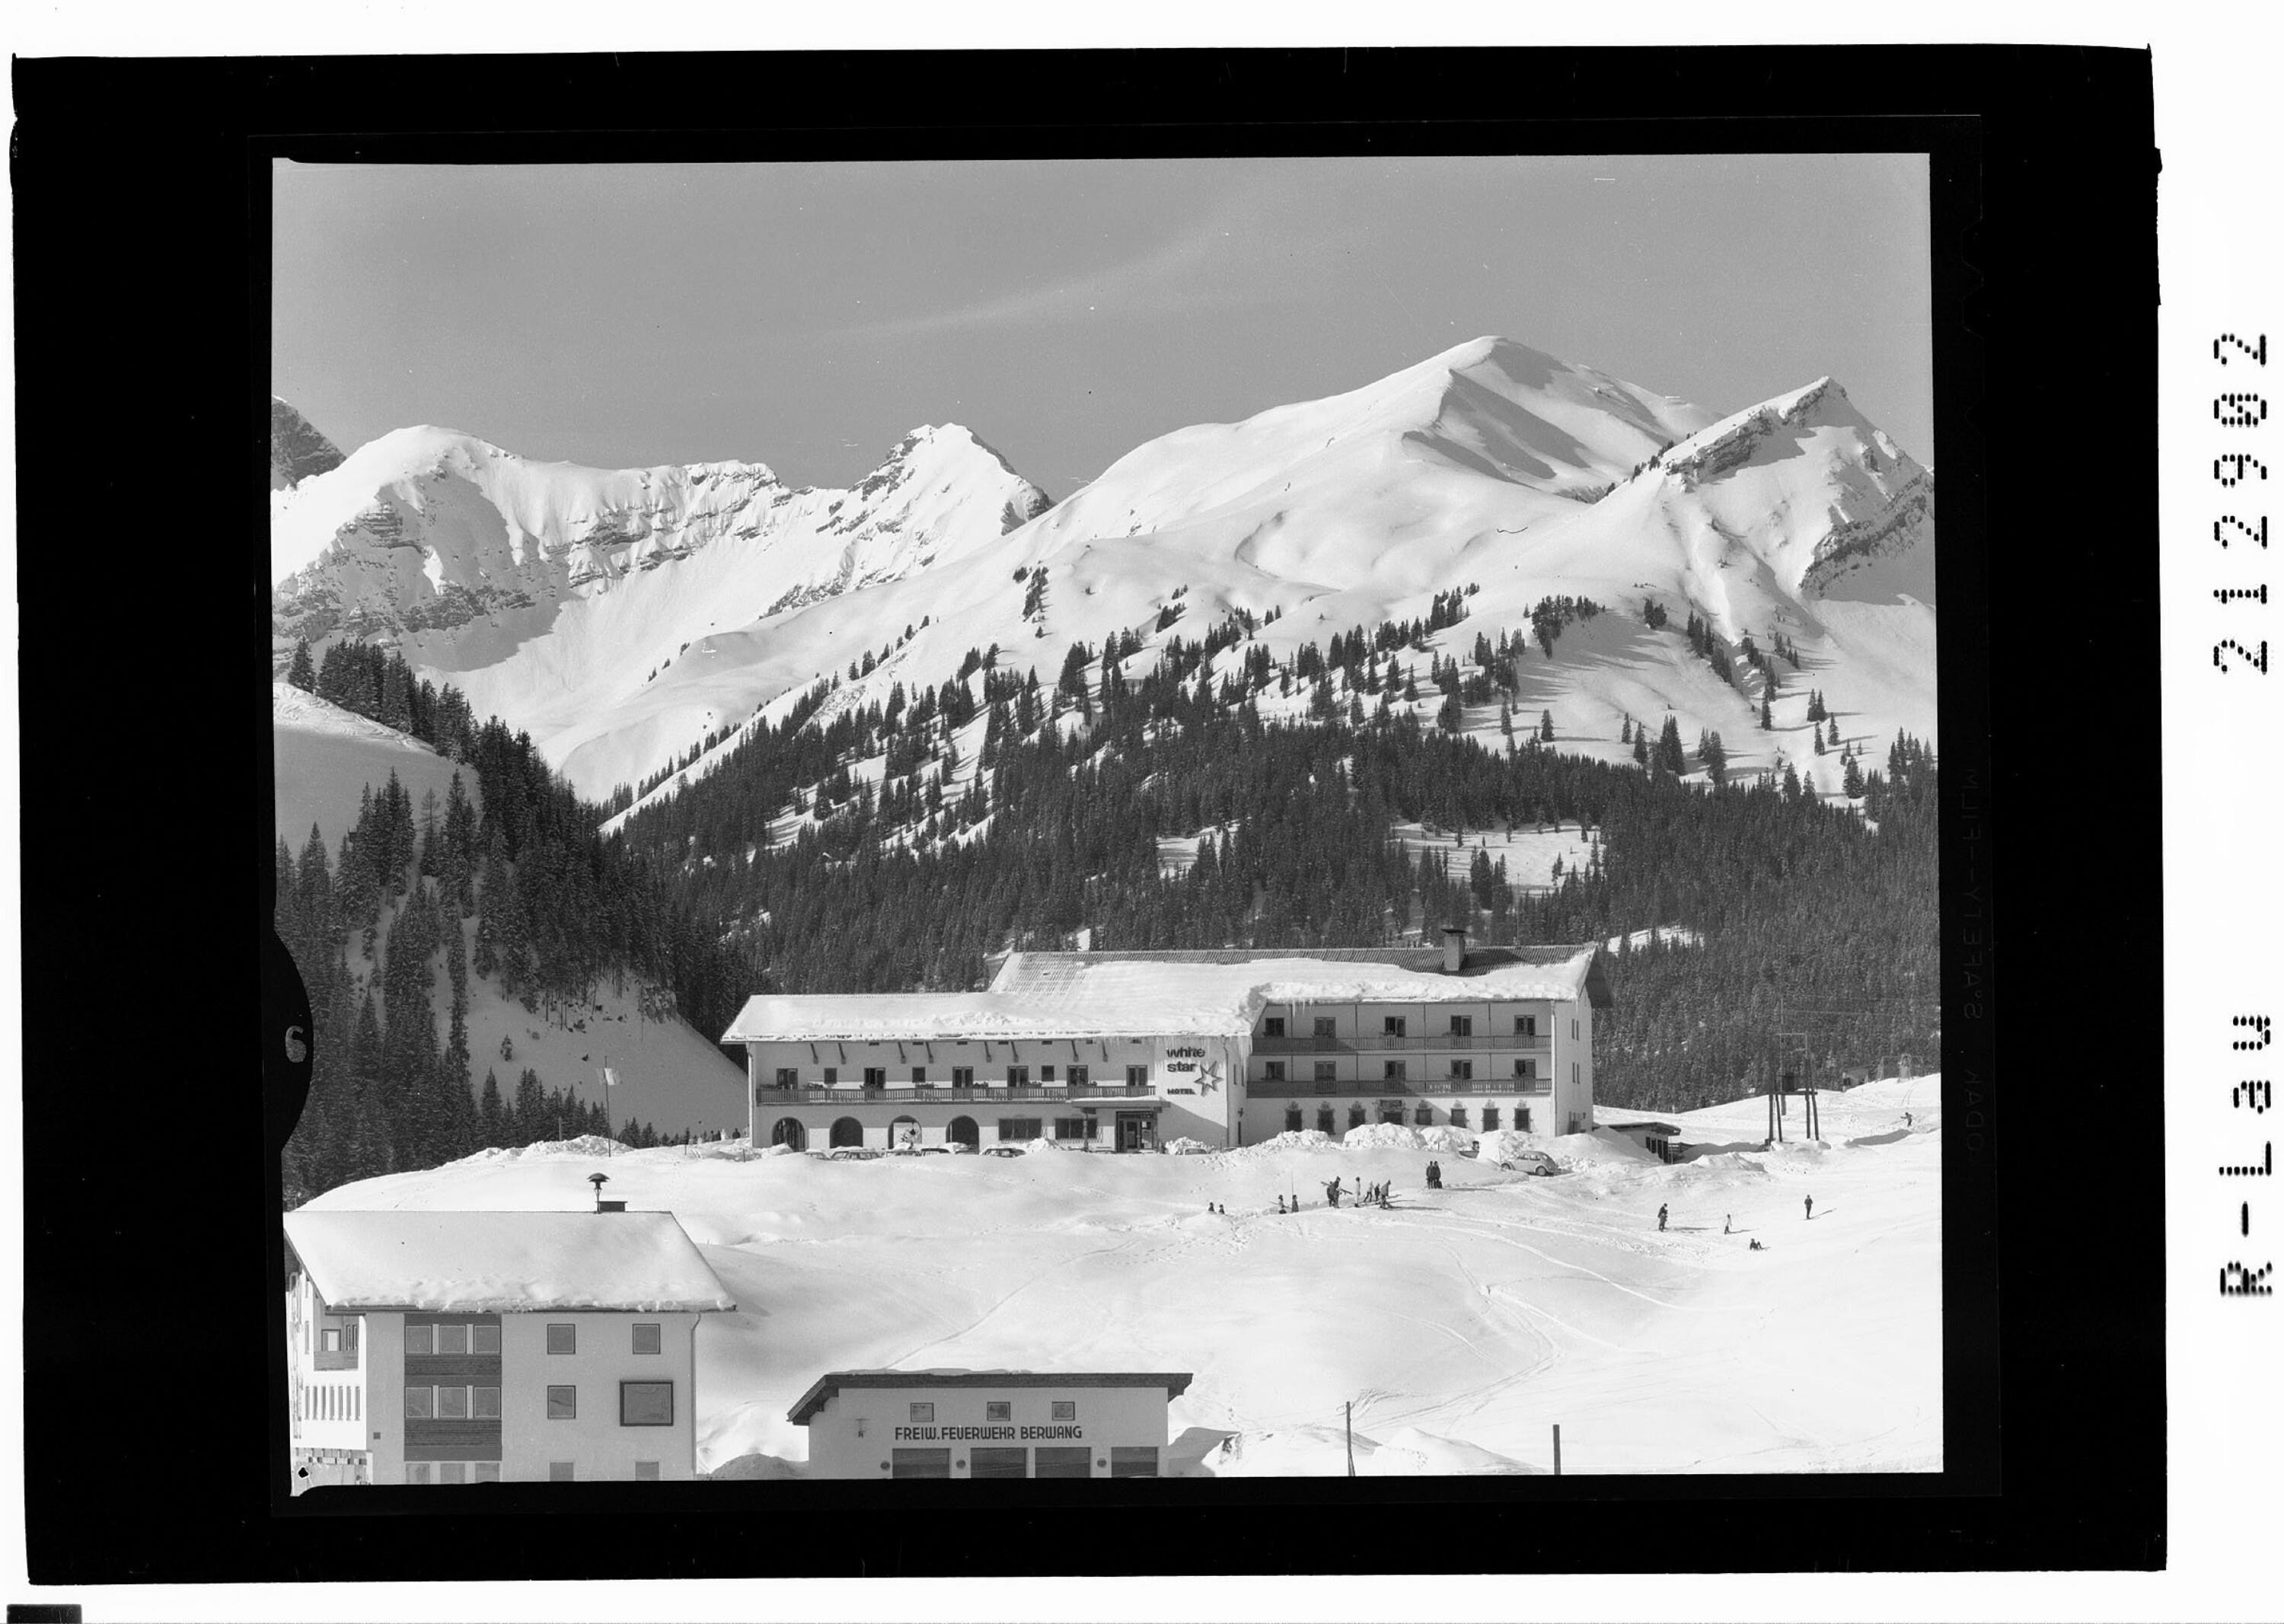 Berwang 1336 m Tirol Hotel White Star></div>


    <hr>
    <div class=